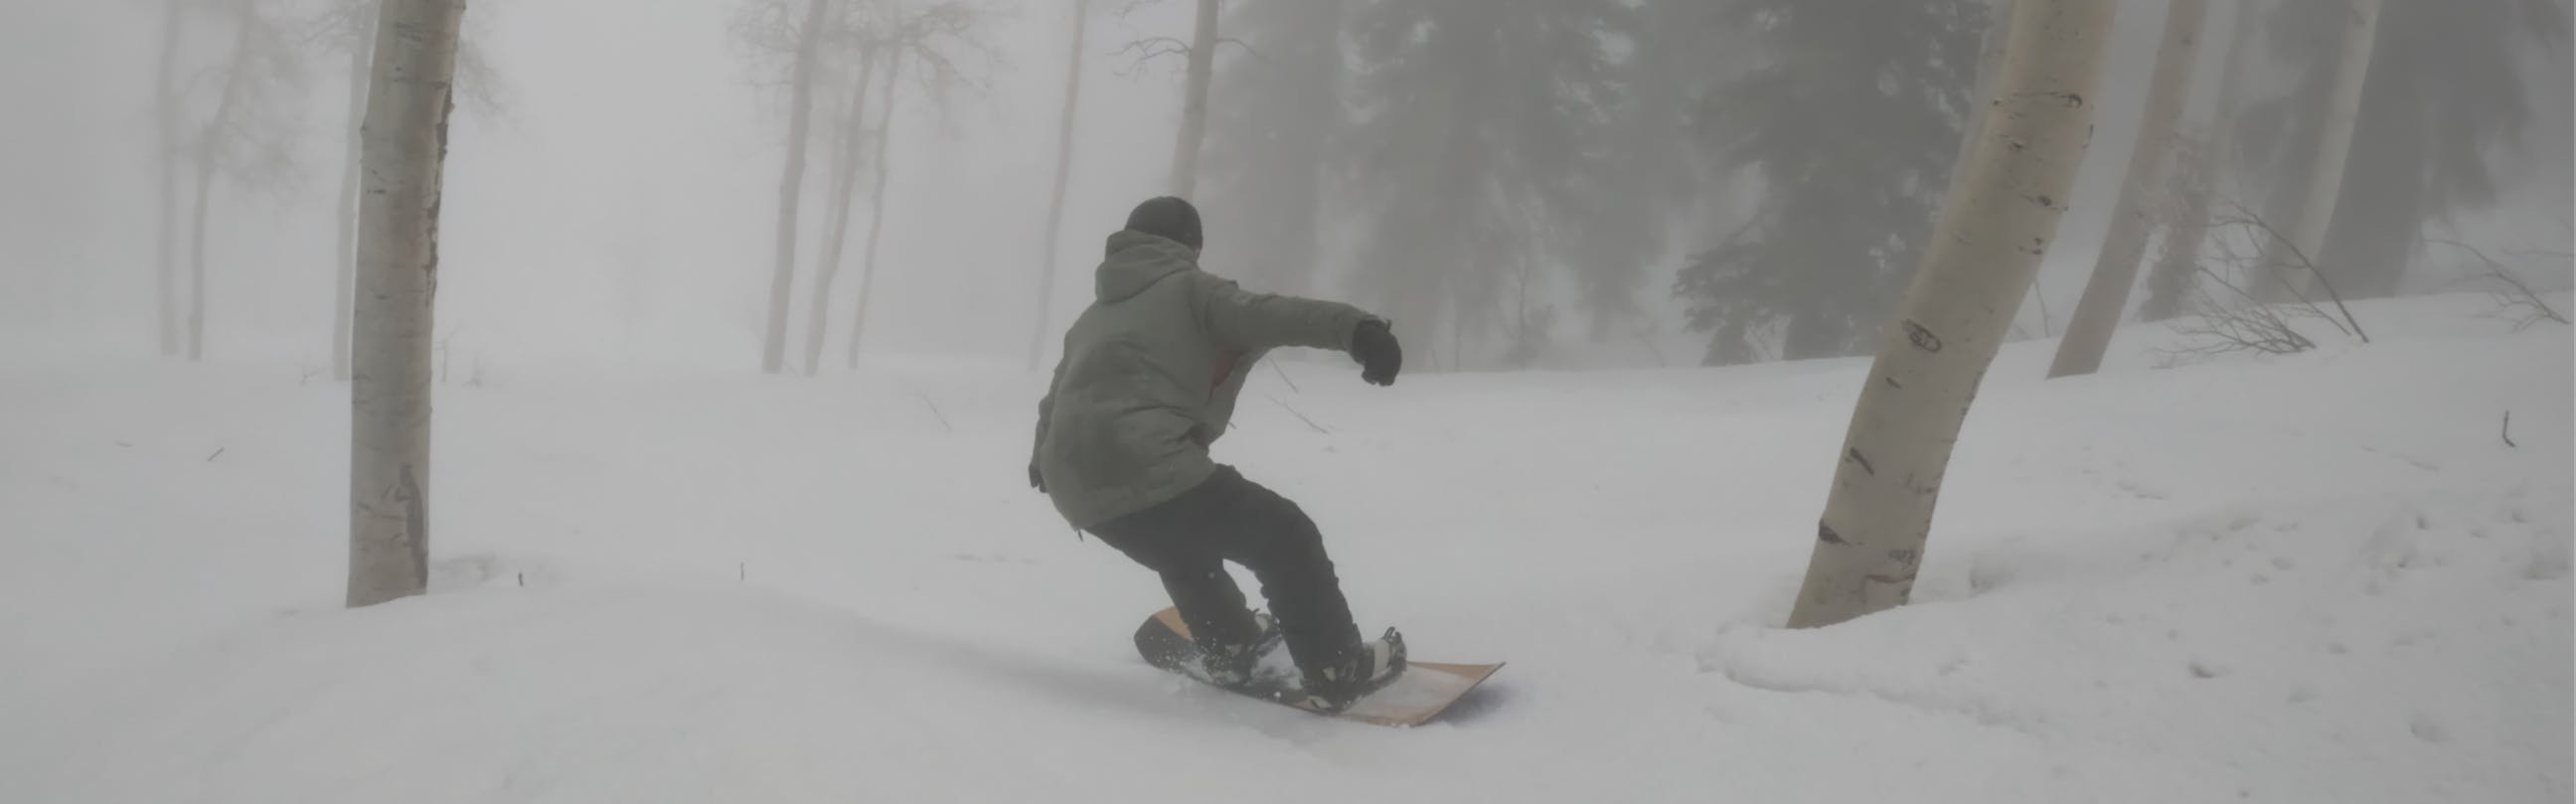 A snowboarder on the 2023 Salomon Assassin Snowboard.